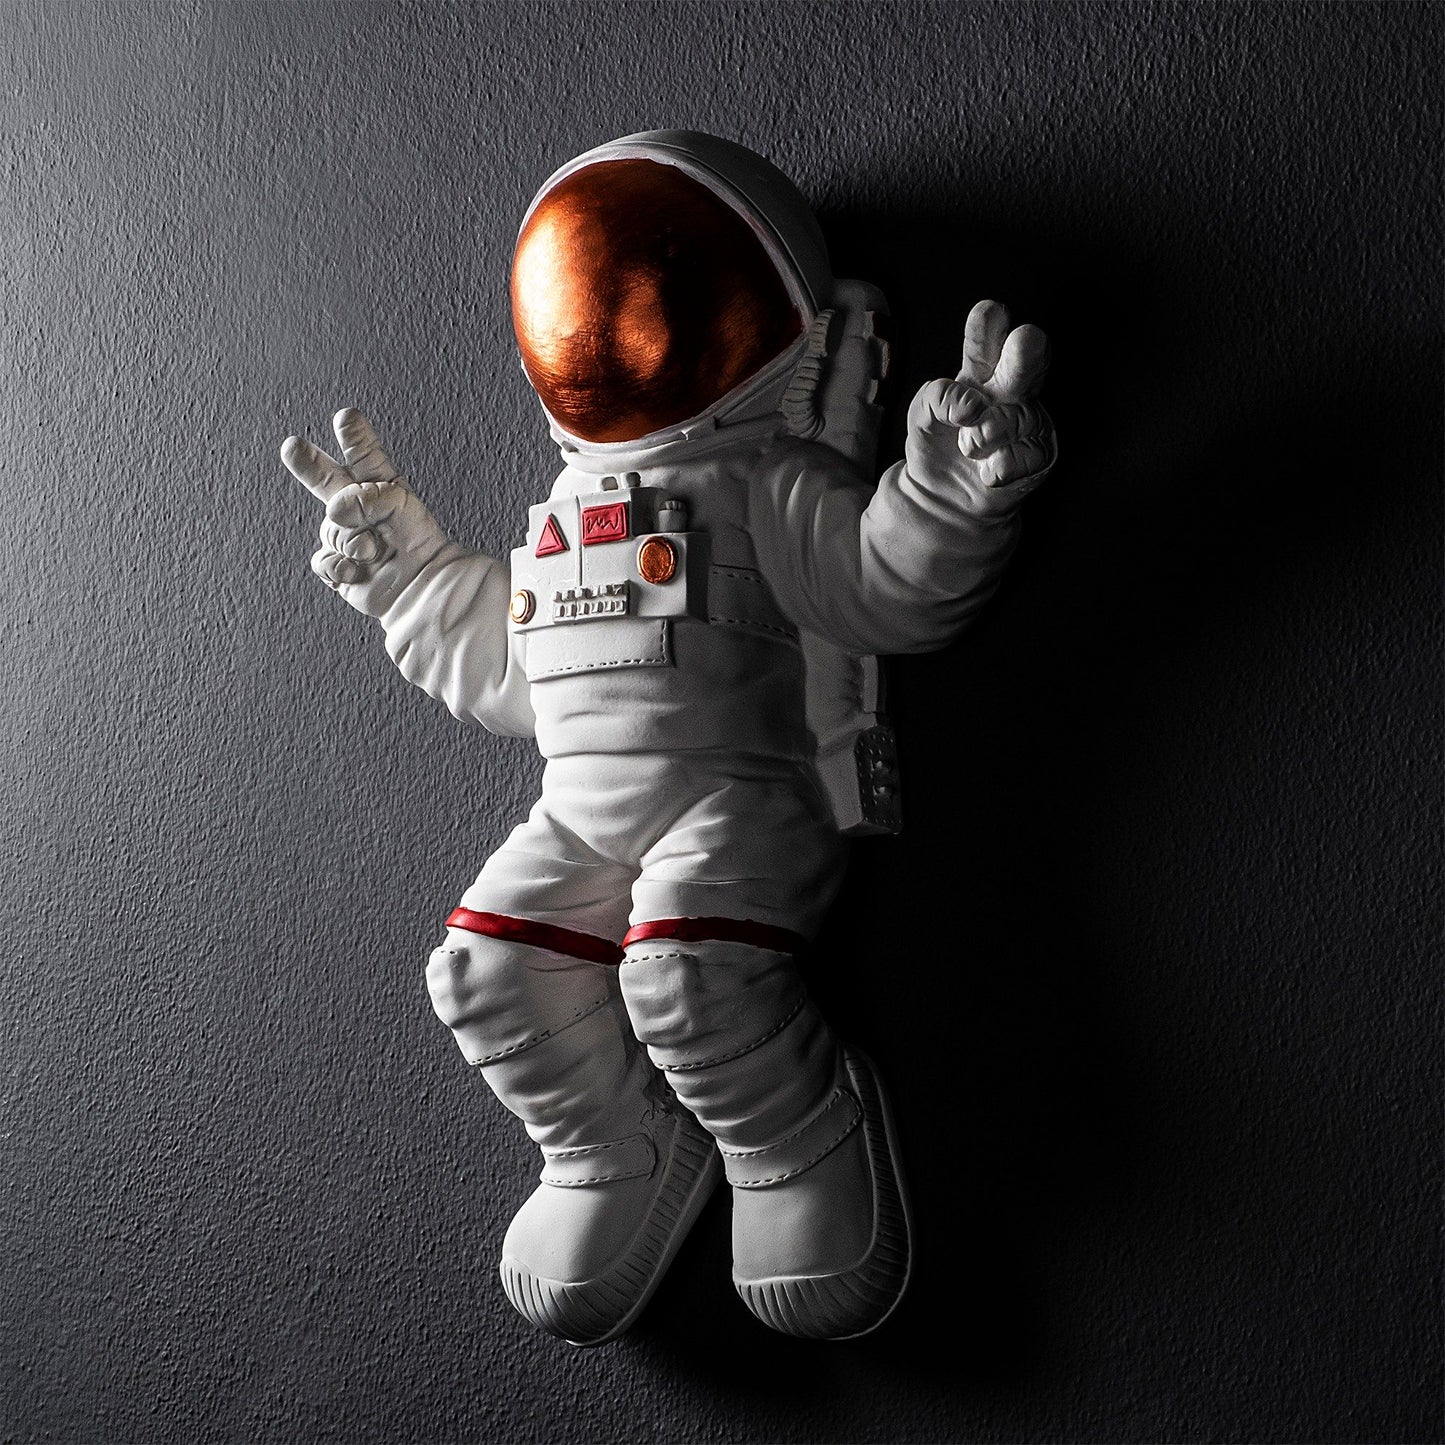 Fredstegn Astronaut - 3 - Dekorativt objekt